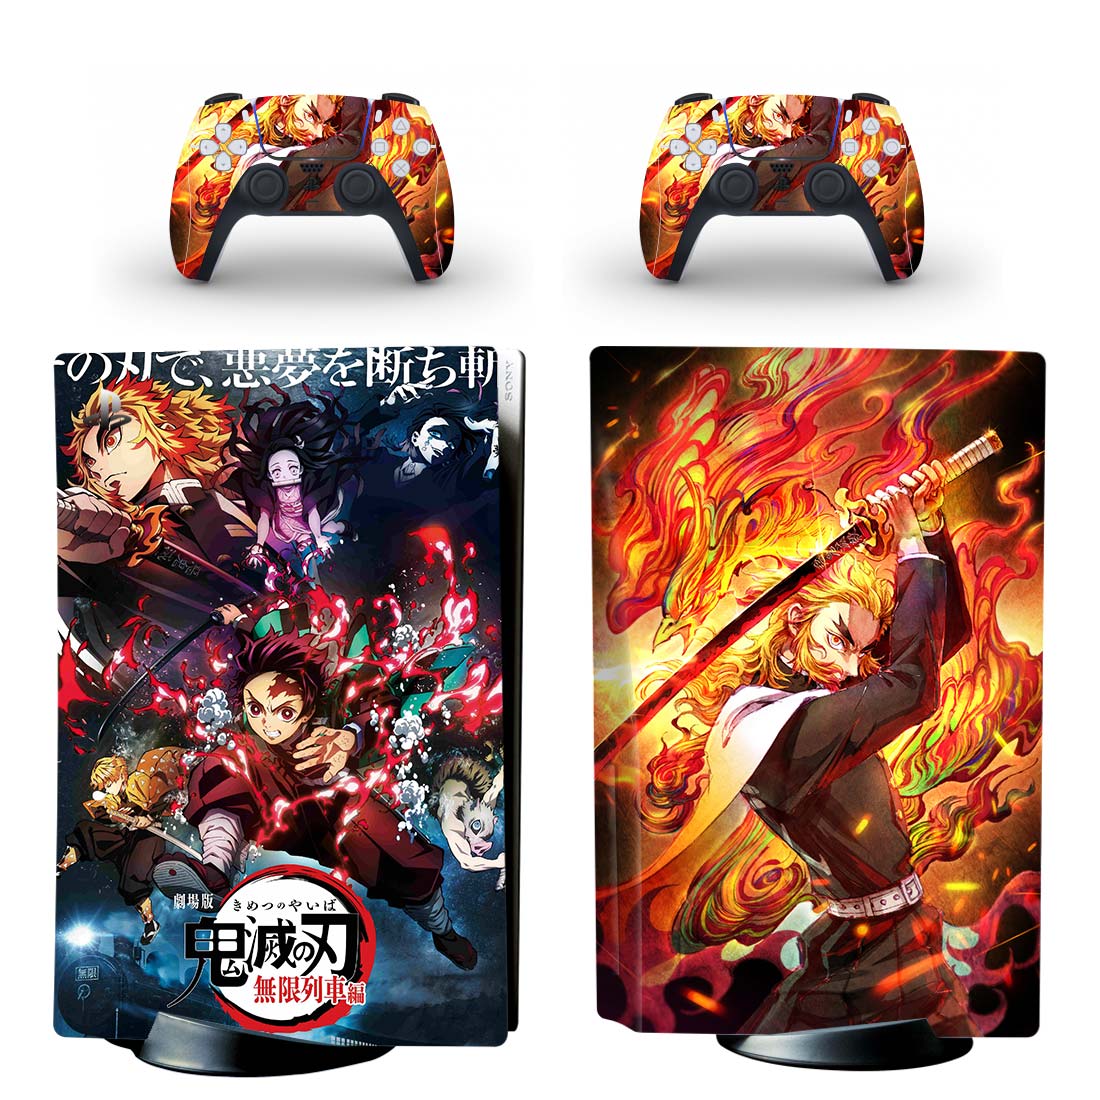 Demon Slayer Kimetsu No Yaiba PS5 Skin Sticker For PlayStation 5 And Controllers